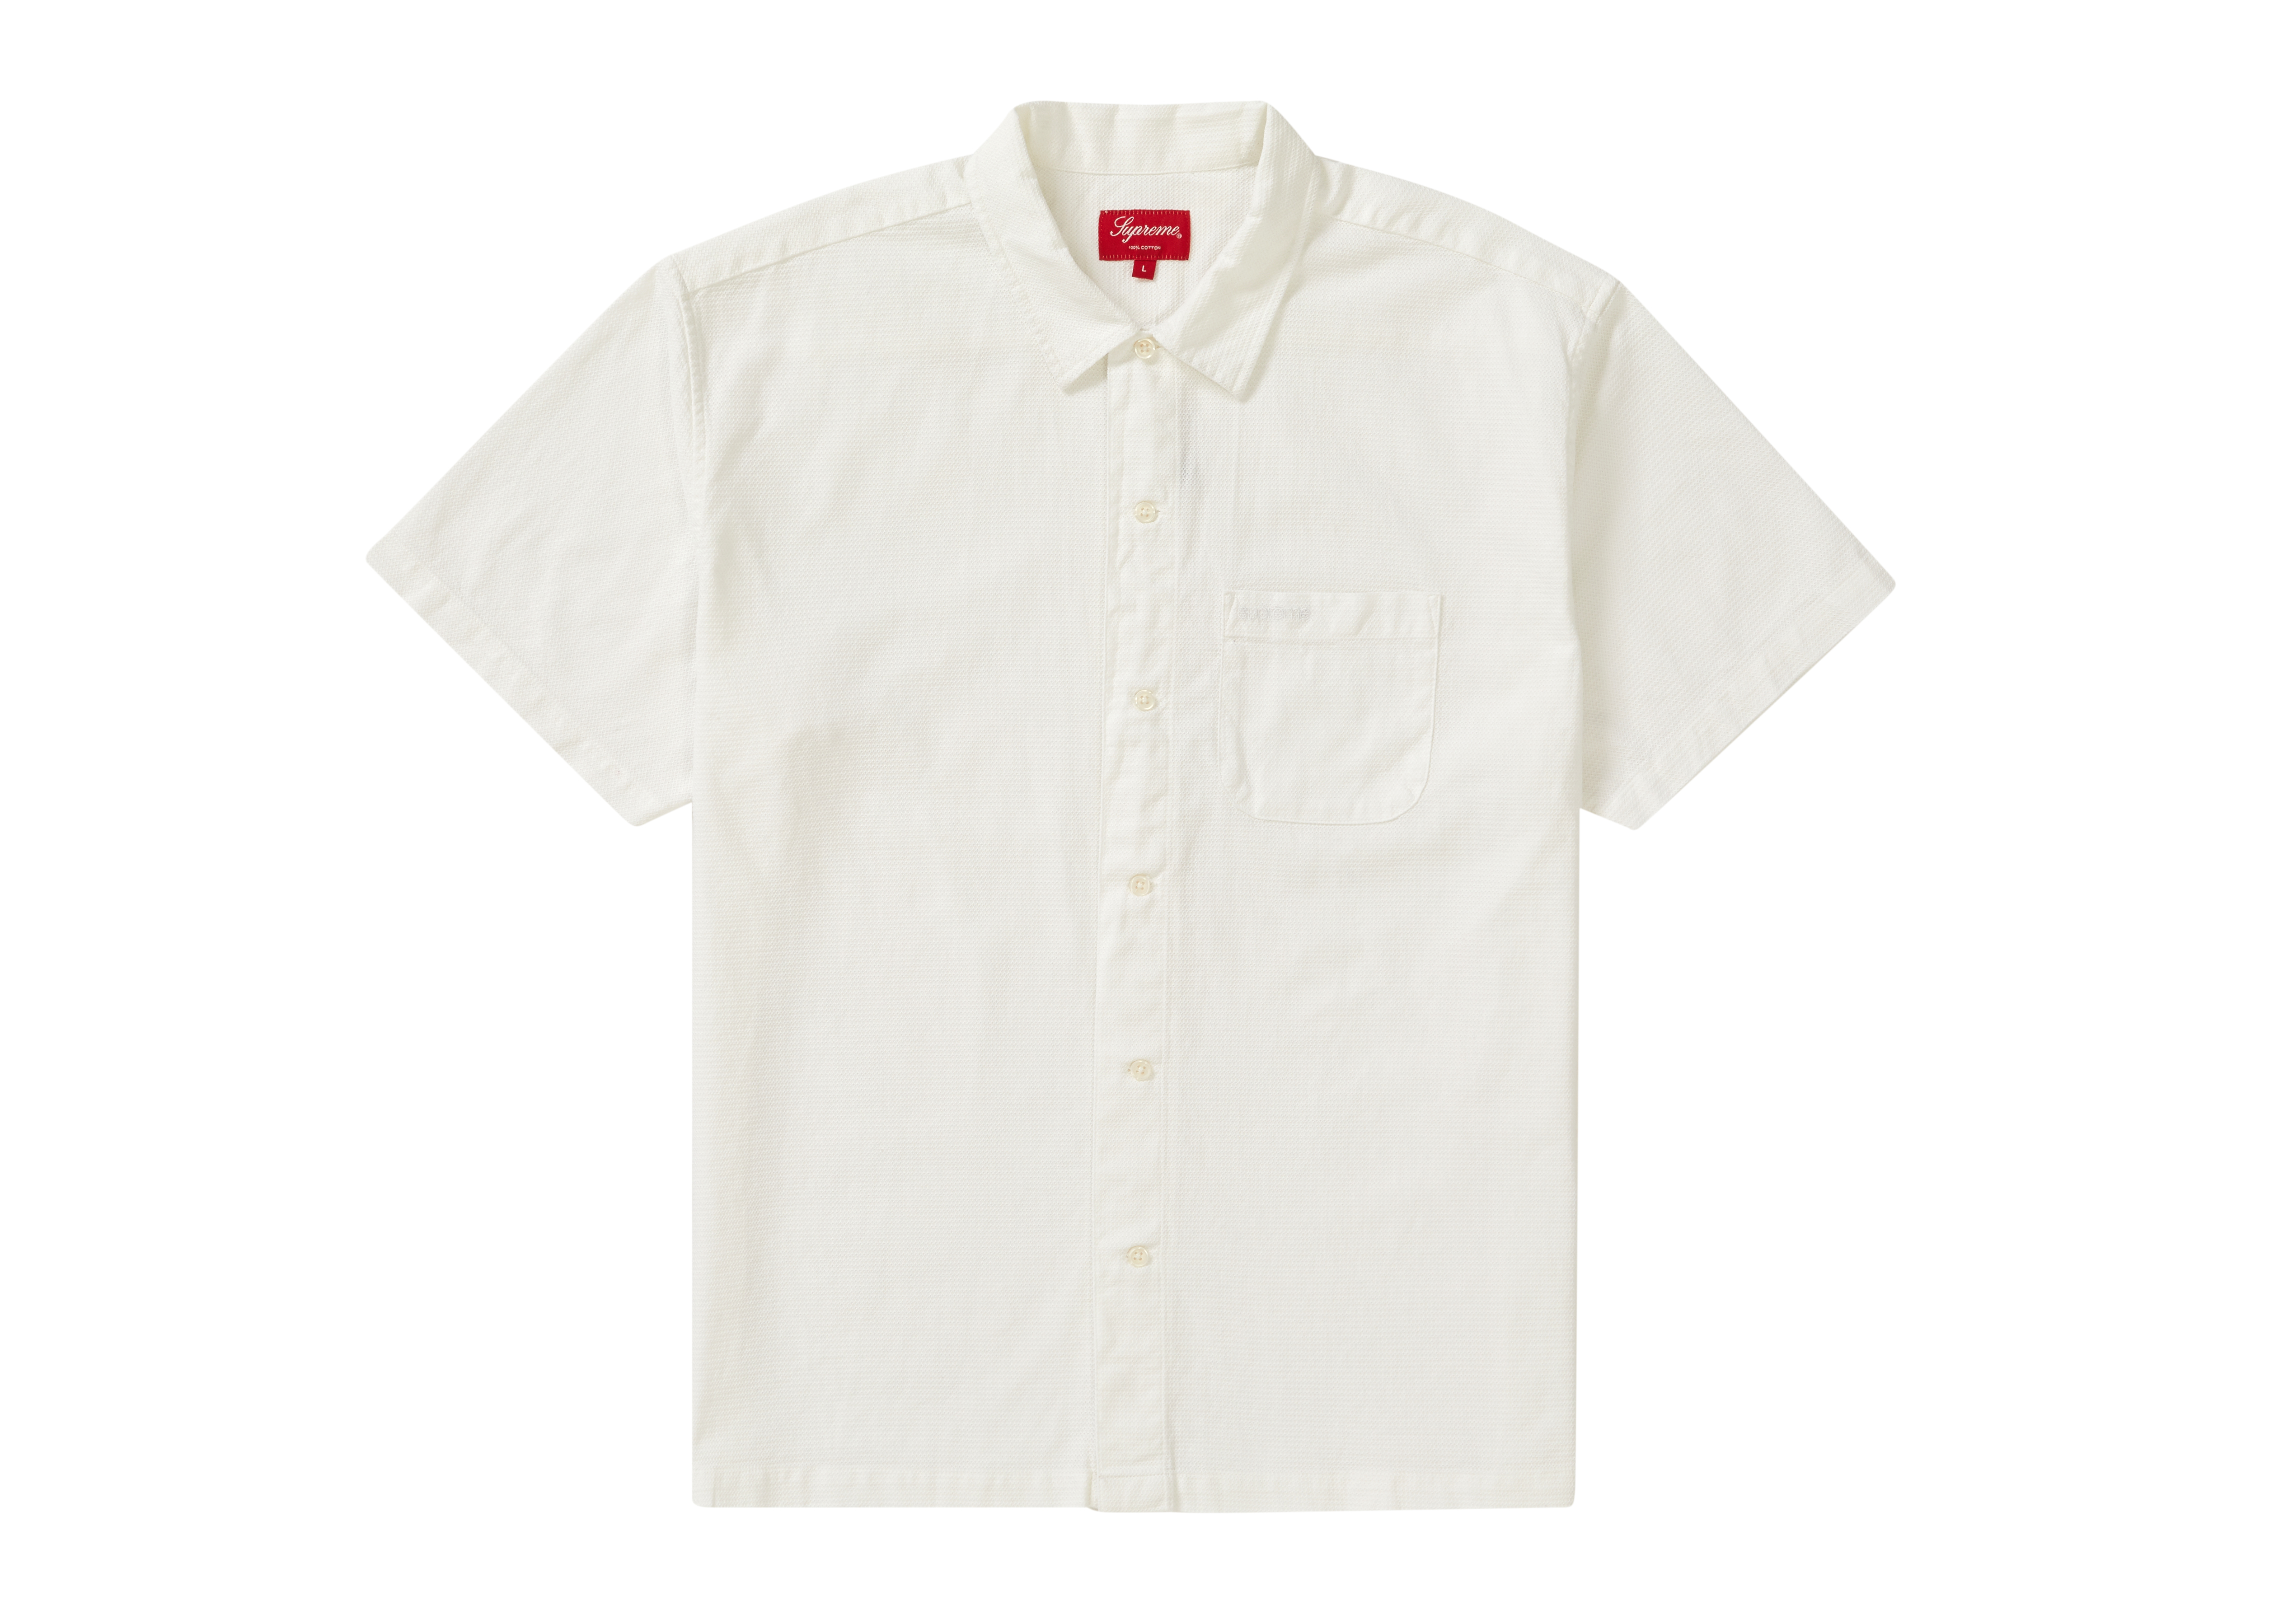 Supreme Pinhole S/S Shirt White - SS19 Men's - US